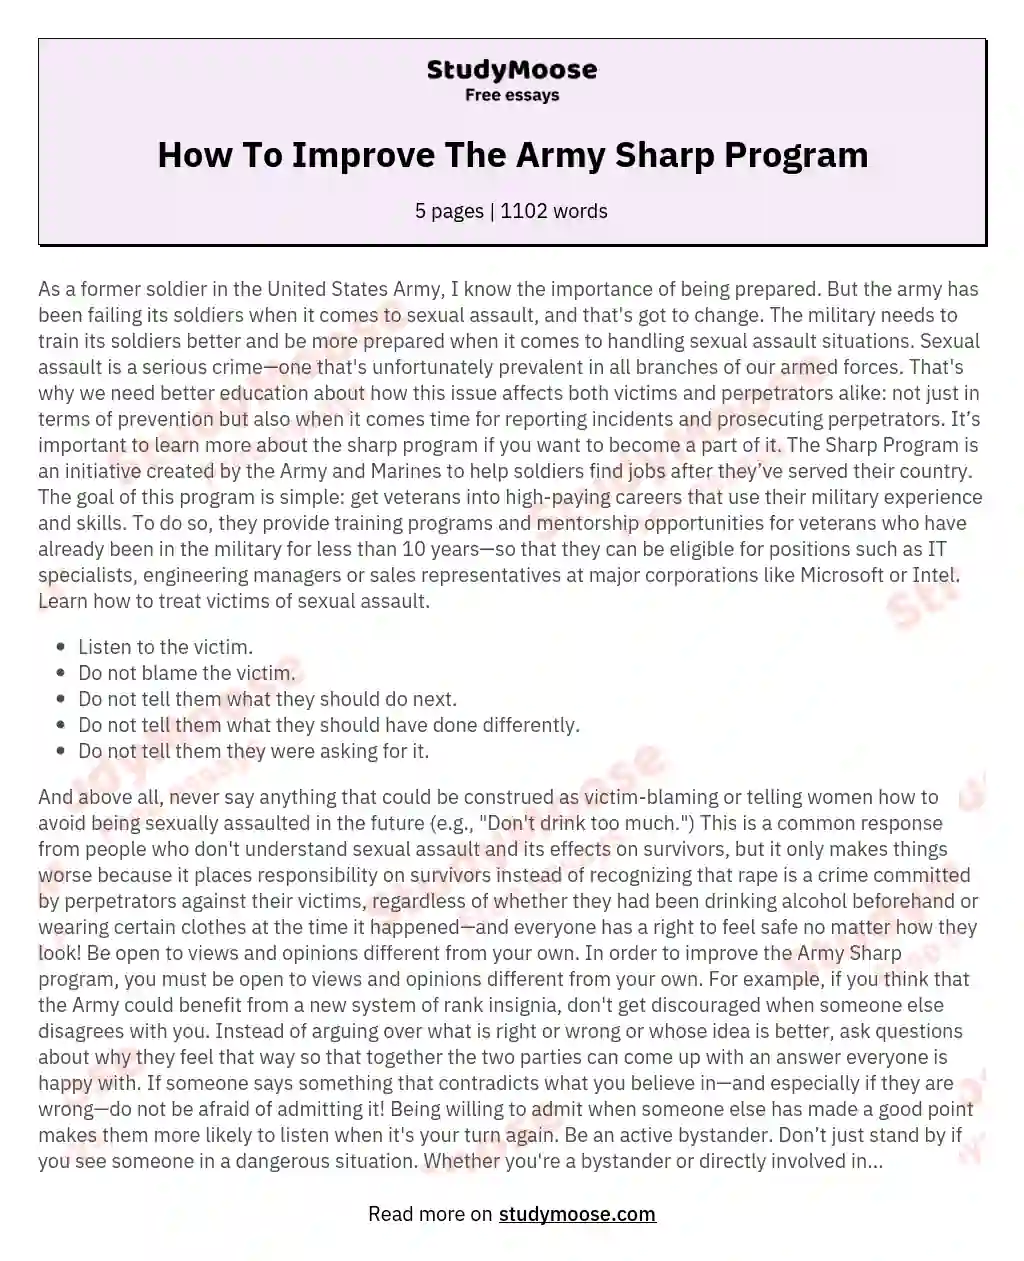 How To Improve The Army Sharp Program essay